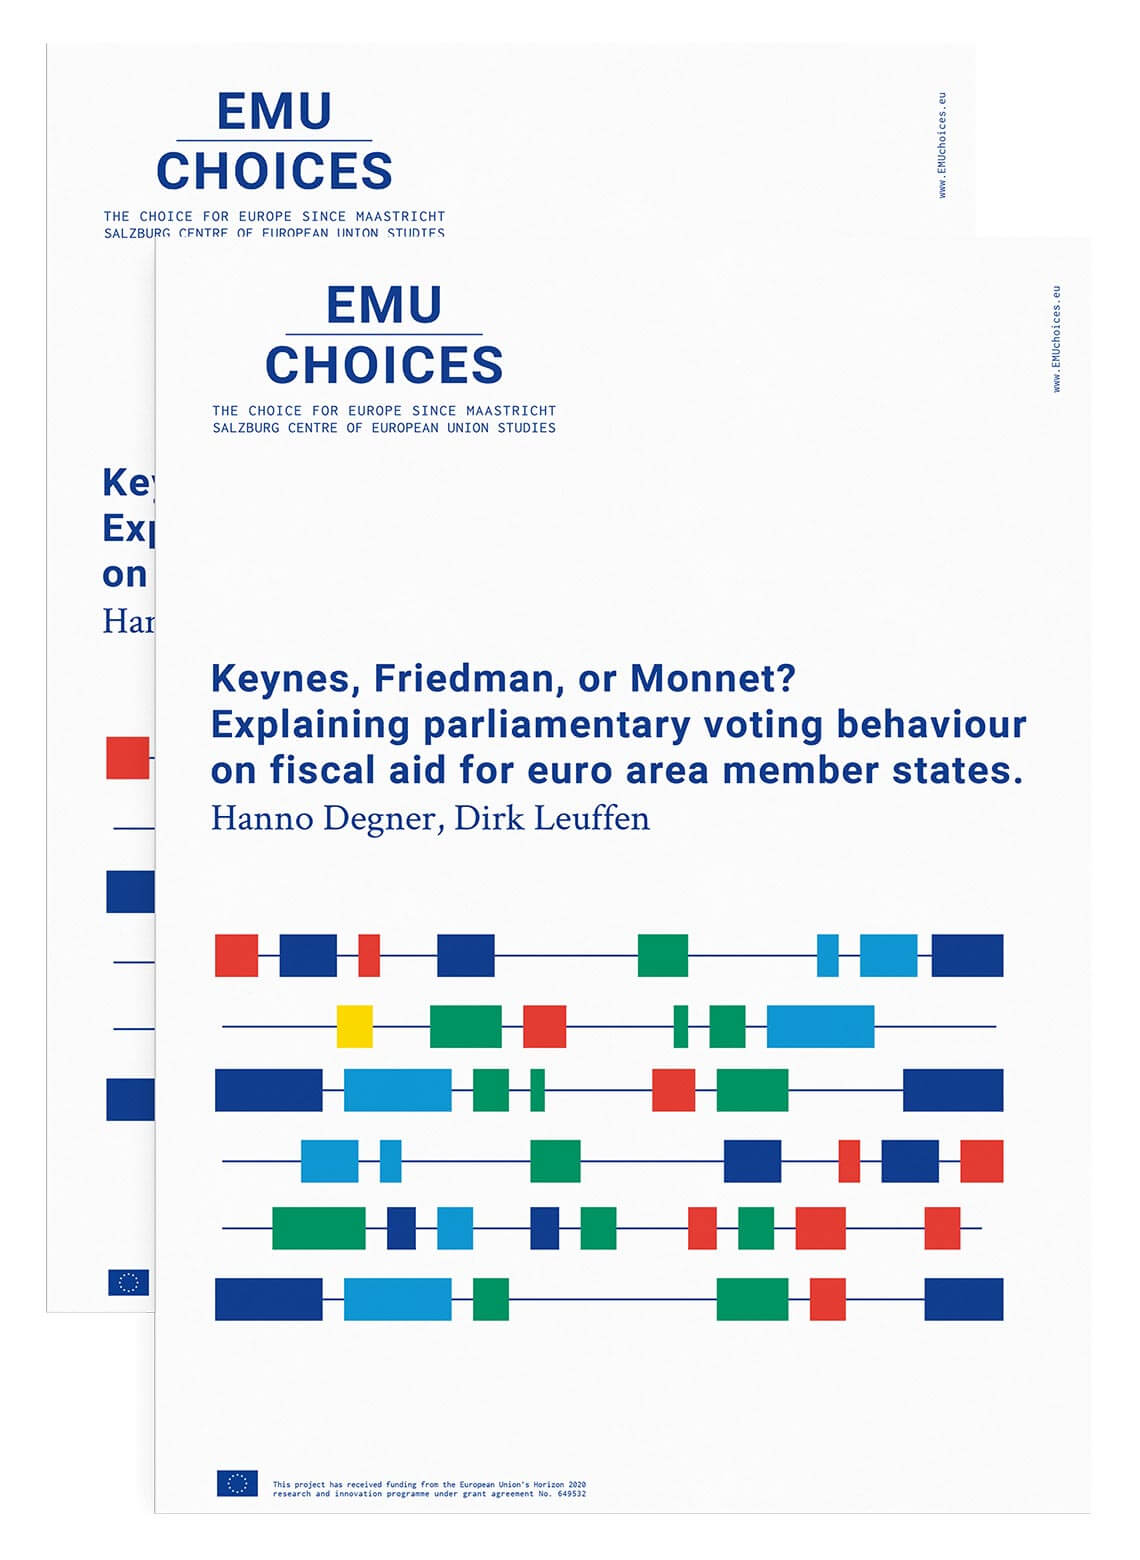 EMU Choices / Horizon2020 Research Project / Publication